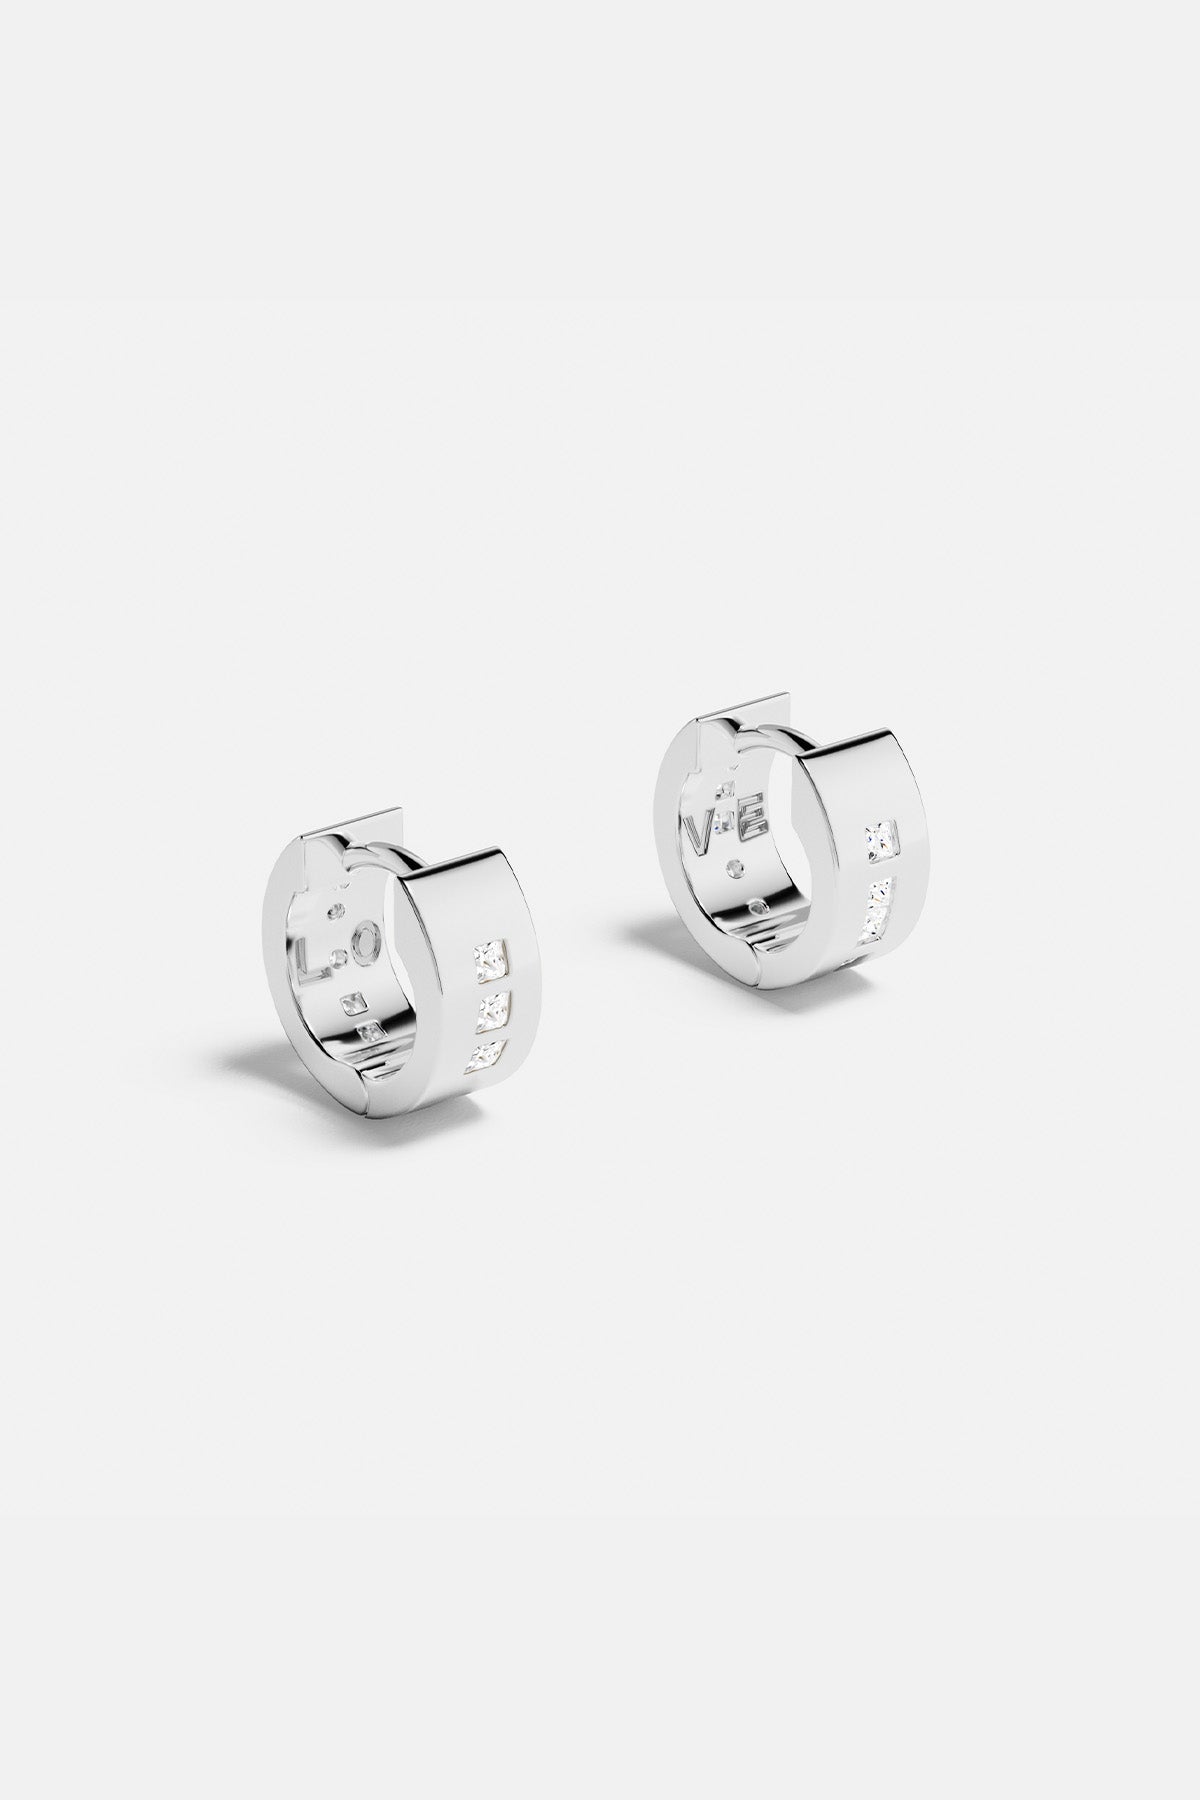 LOVE Morse Code Huggie Earrings - APM Monaco UK